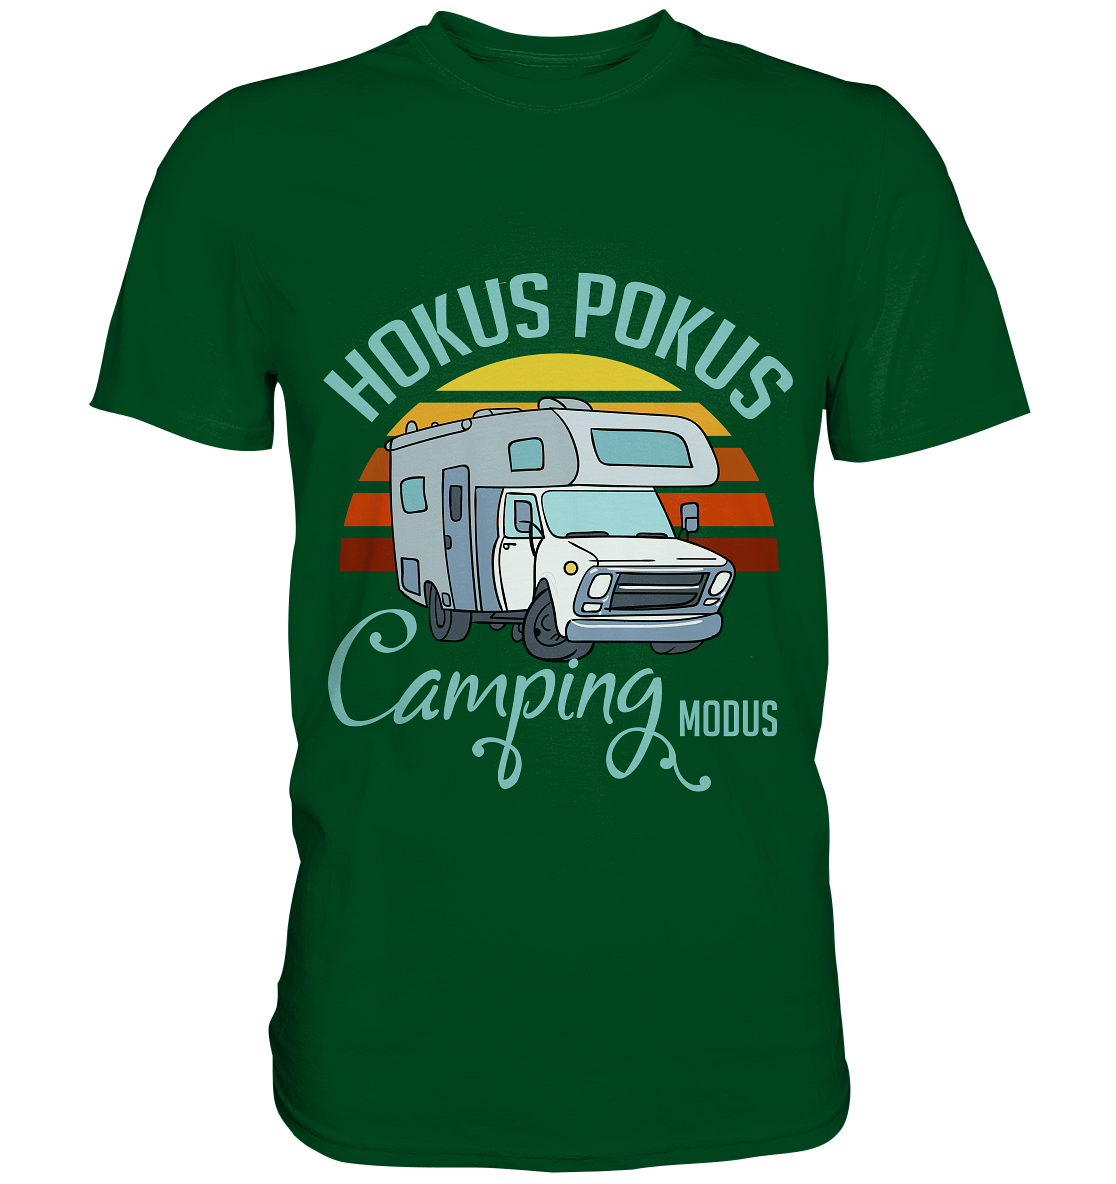 Hokus Pokus Camping Modus - Premium Shirt